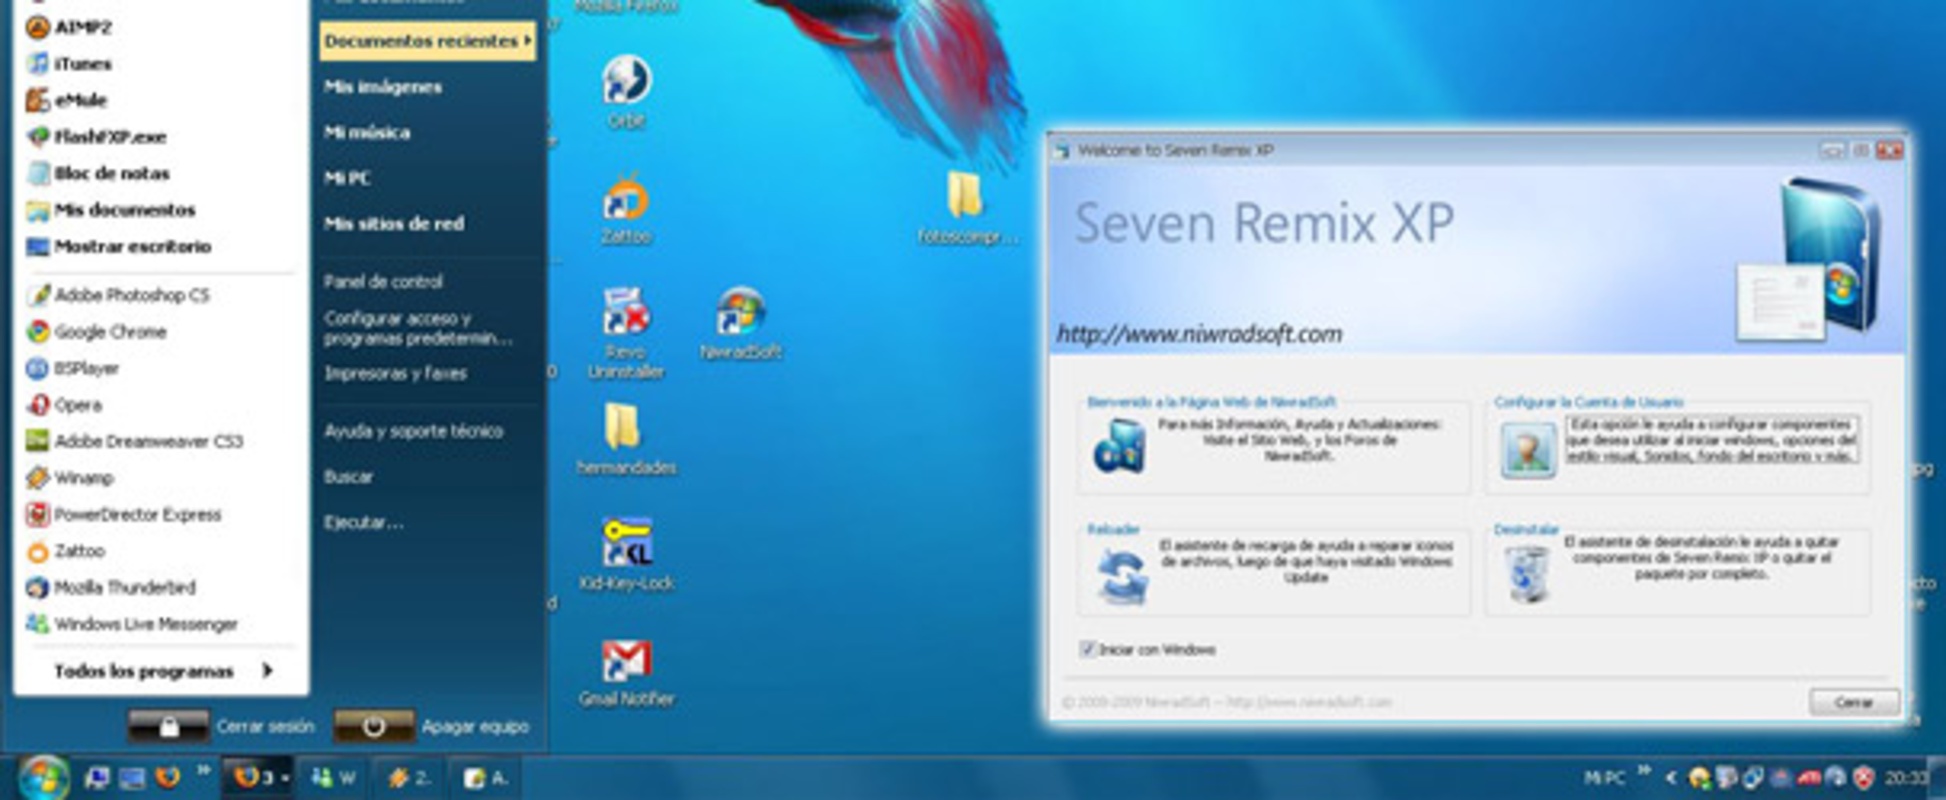 Seven Remix XP 2.31 for Windows Screenshot 1